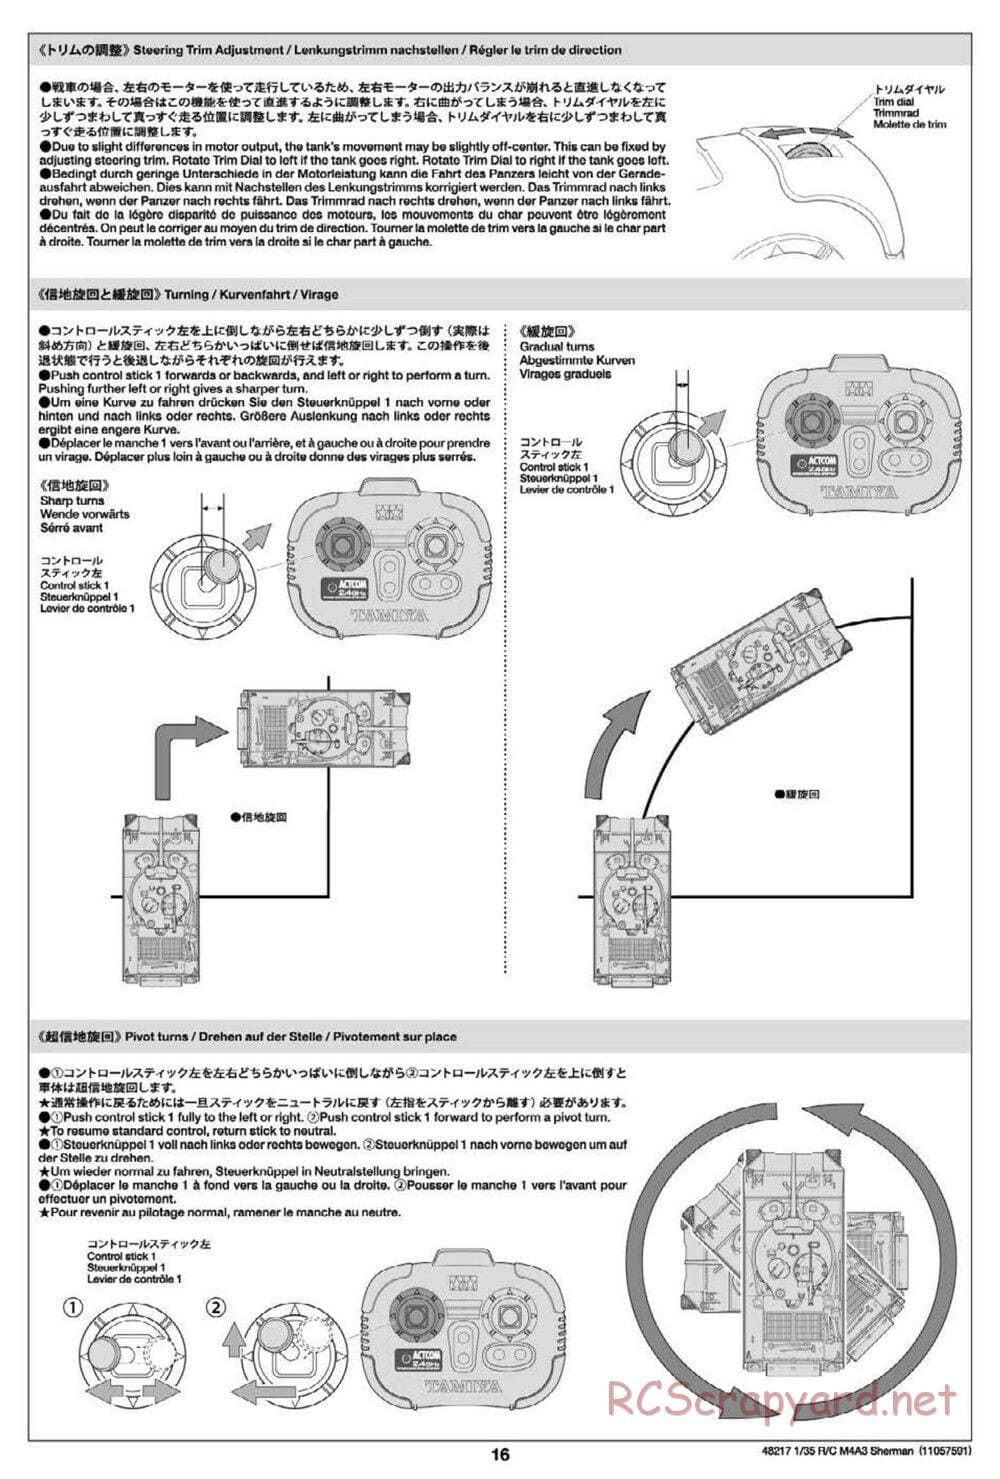 Tamiya - US Medium Tank M4A3 Sherman - 1/35 Scale Chassis - Manual - Page 16